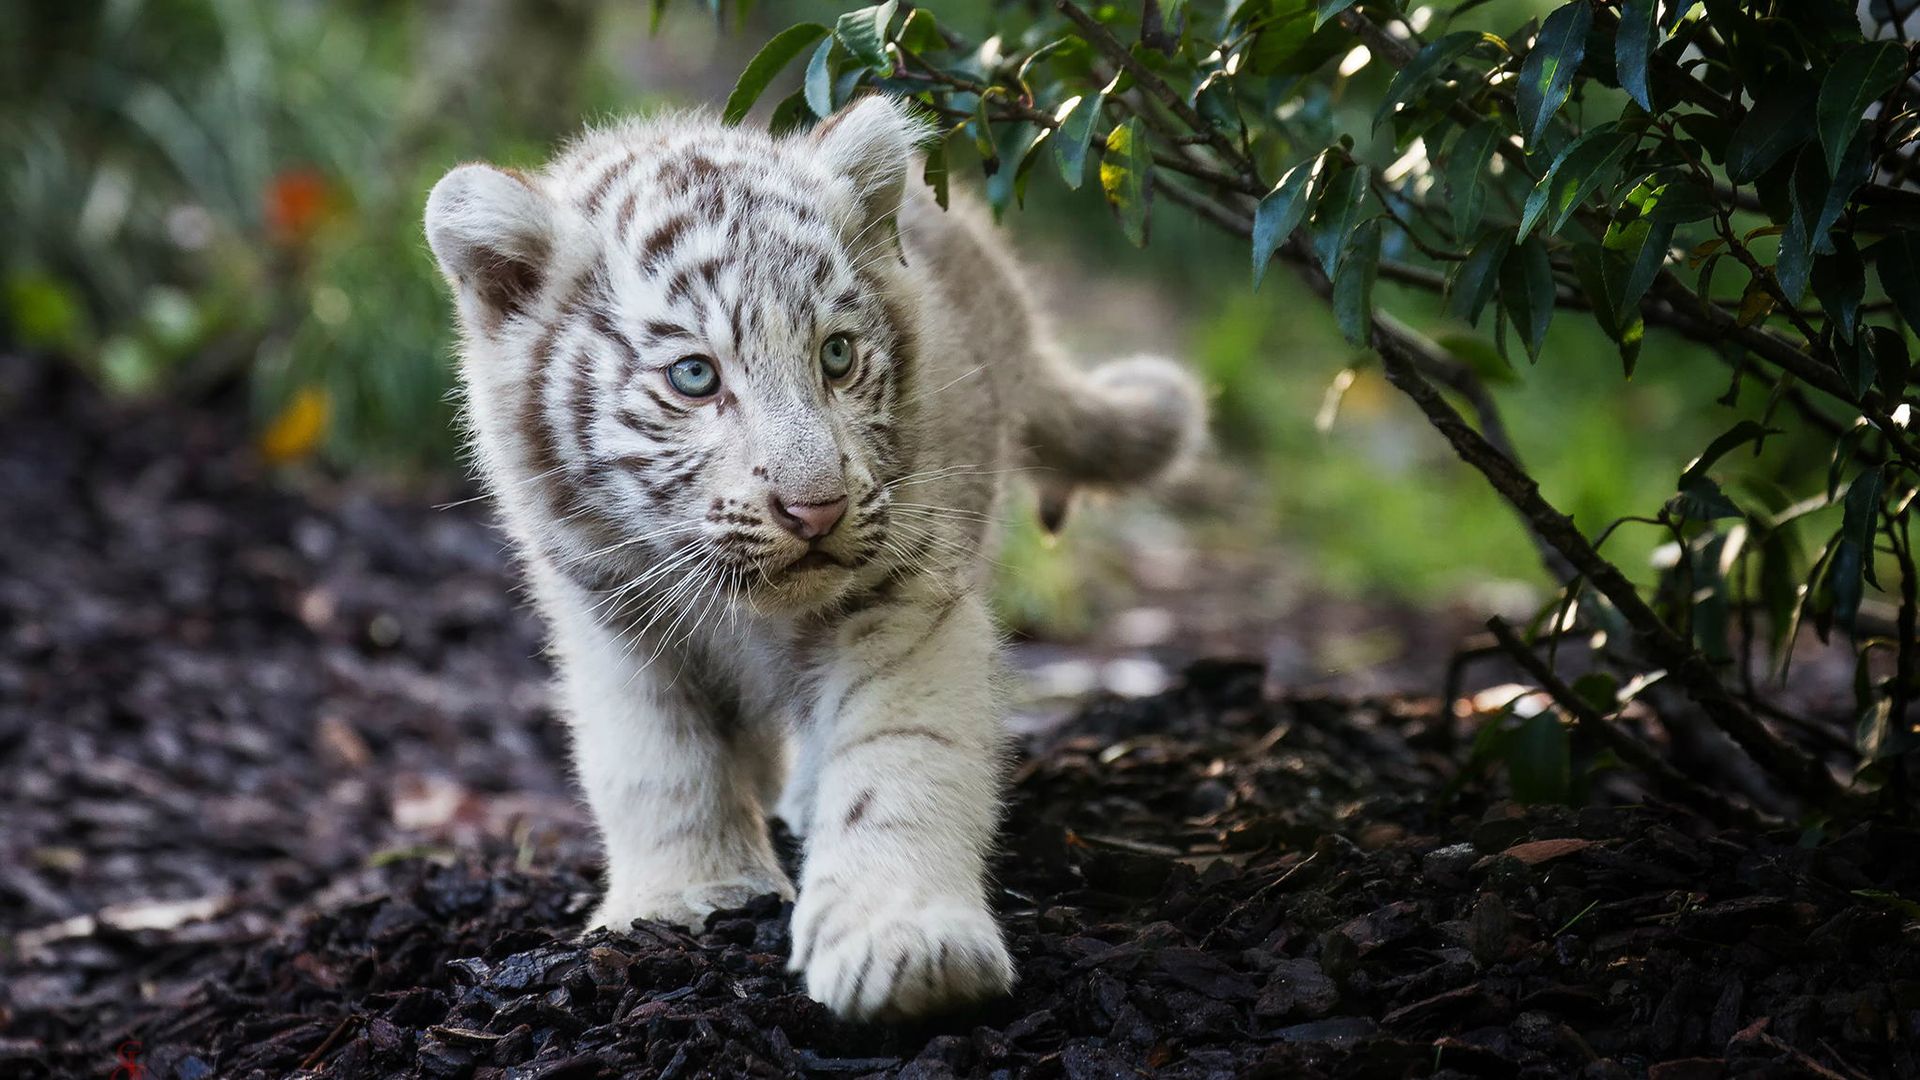 Cute Cub Bengal White Tiger, HD Animals, 4k Wallpaper, Image